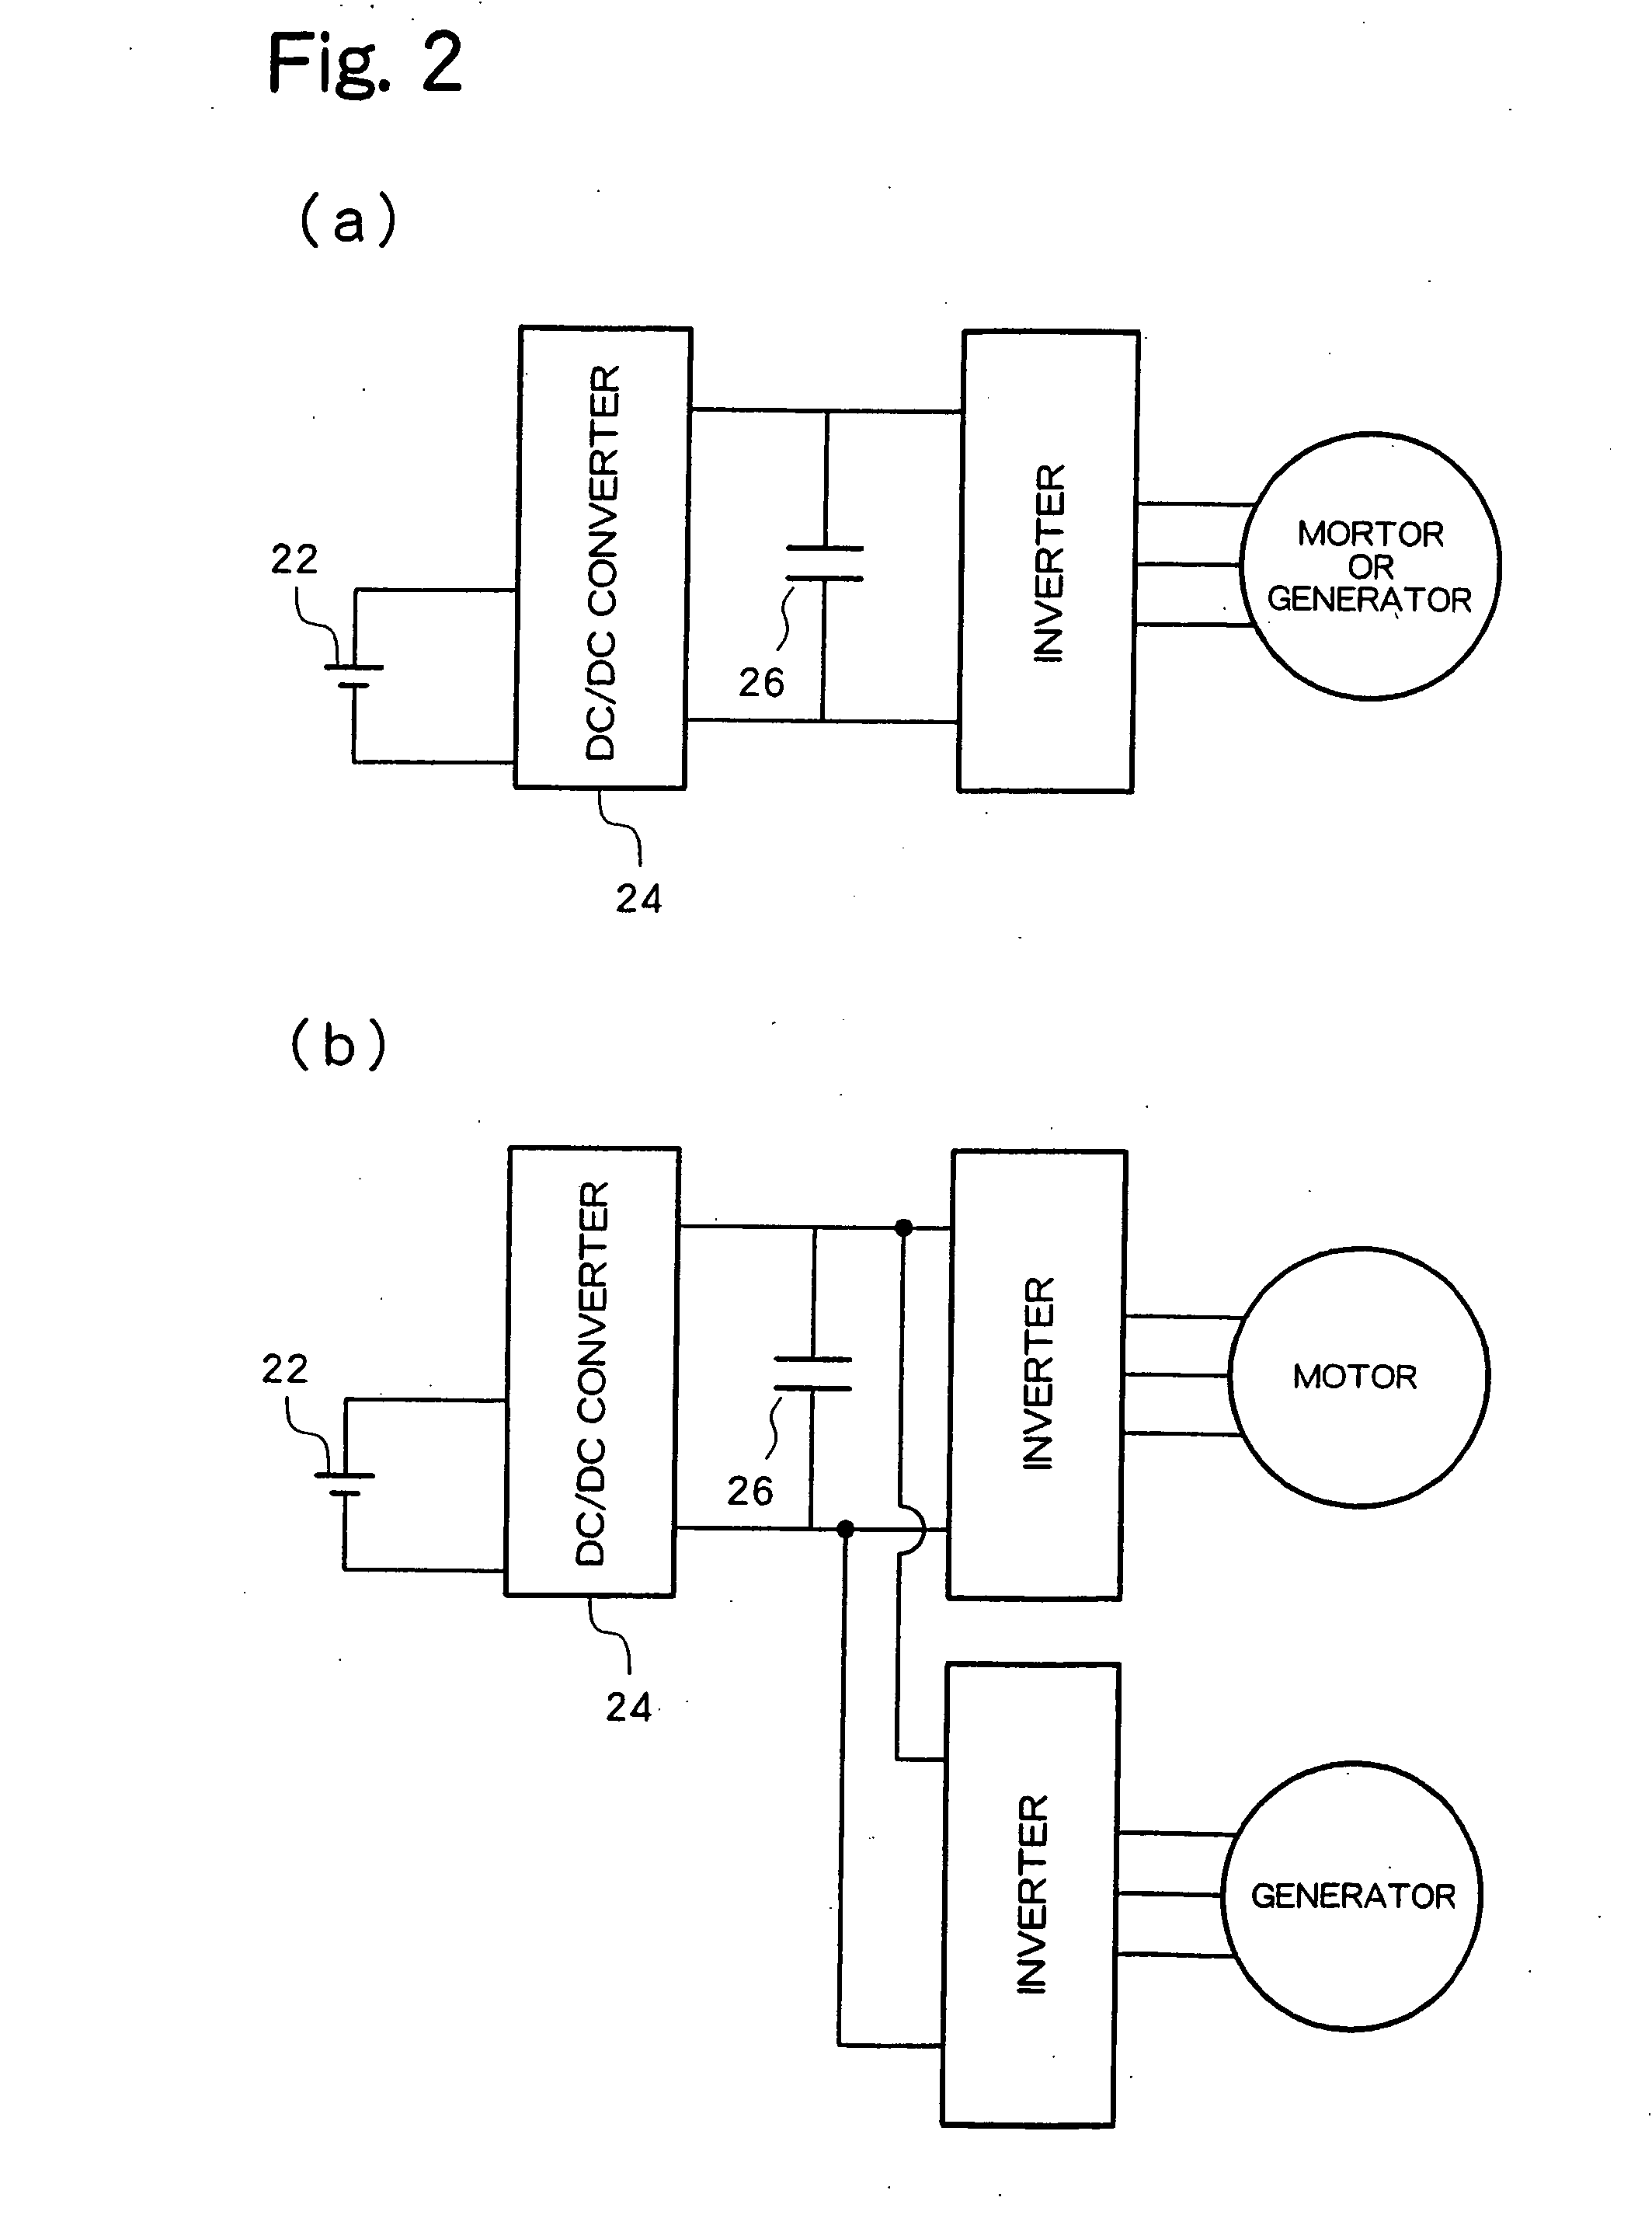 Voltage converter control apparatus and method